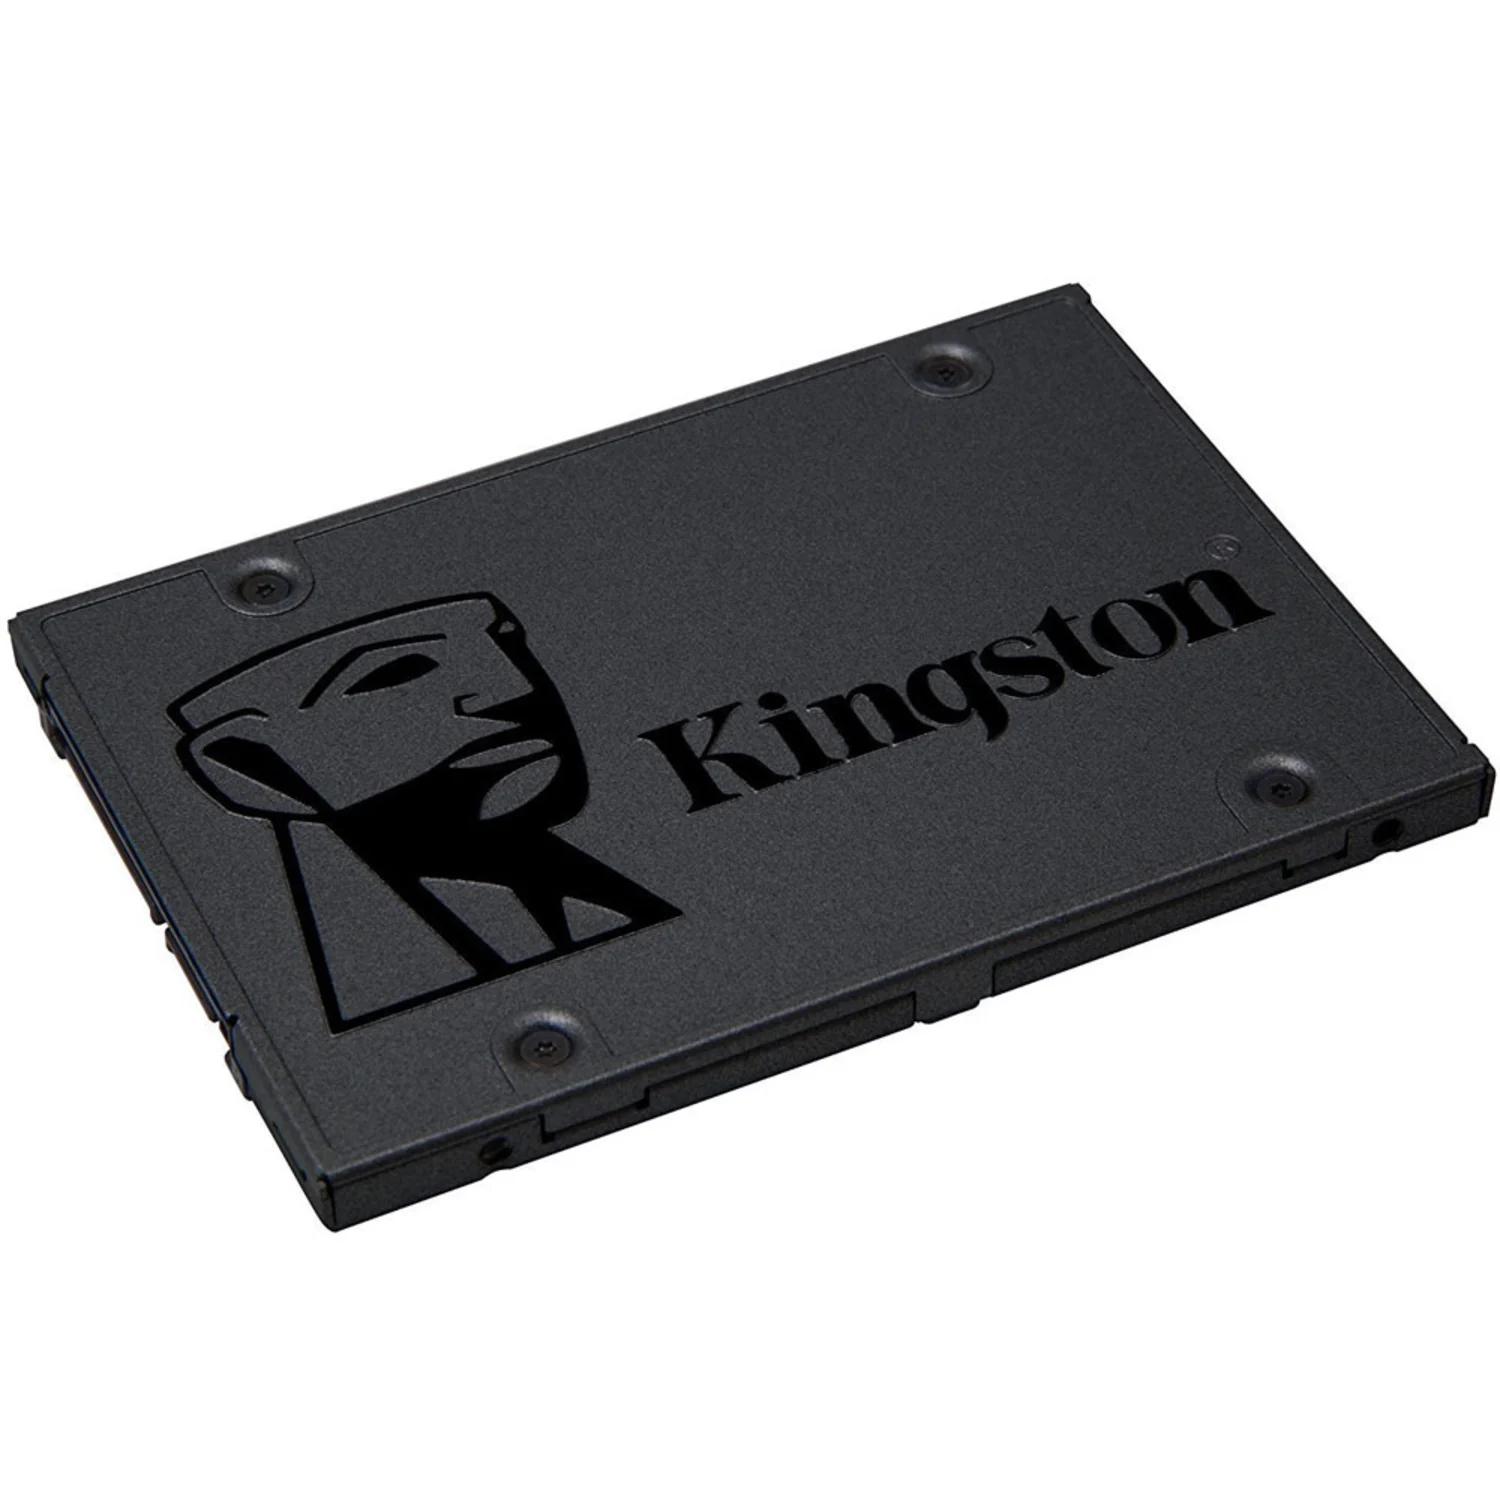 SSD Kingston SA400S37 240GB 2.5" SATA 3 - SA400S37/240G